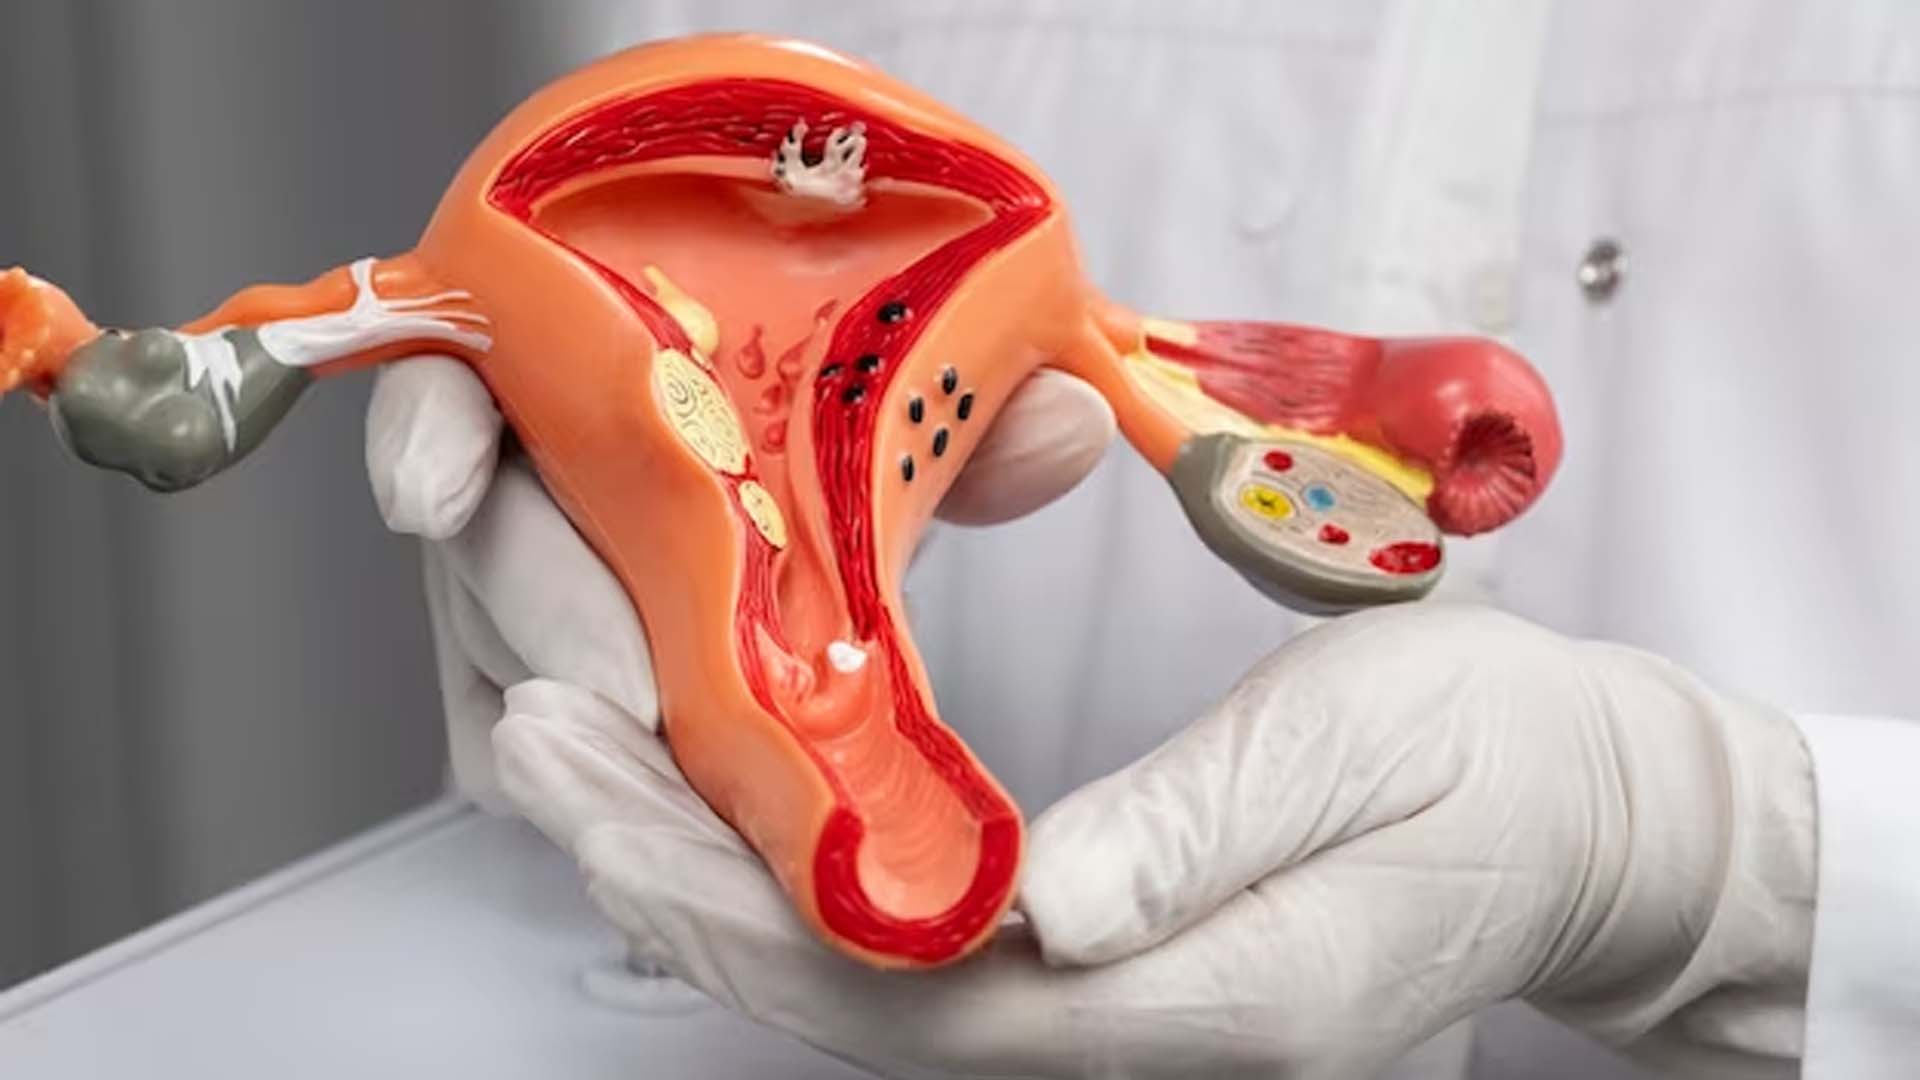 Doctor showing Uterus Model with Uterine fibroids